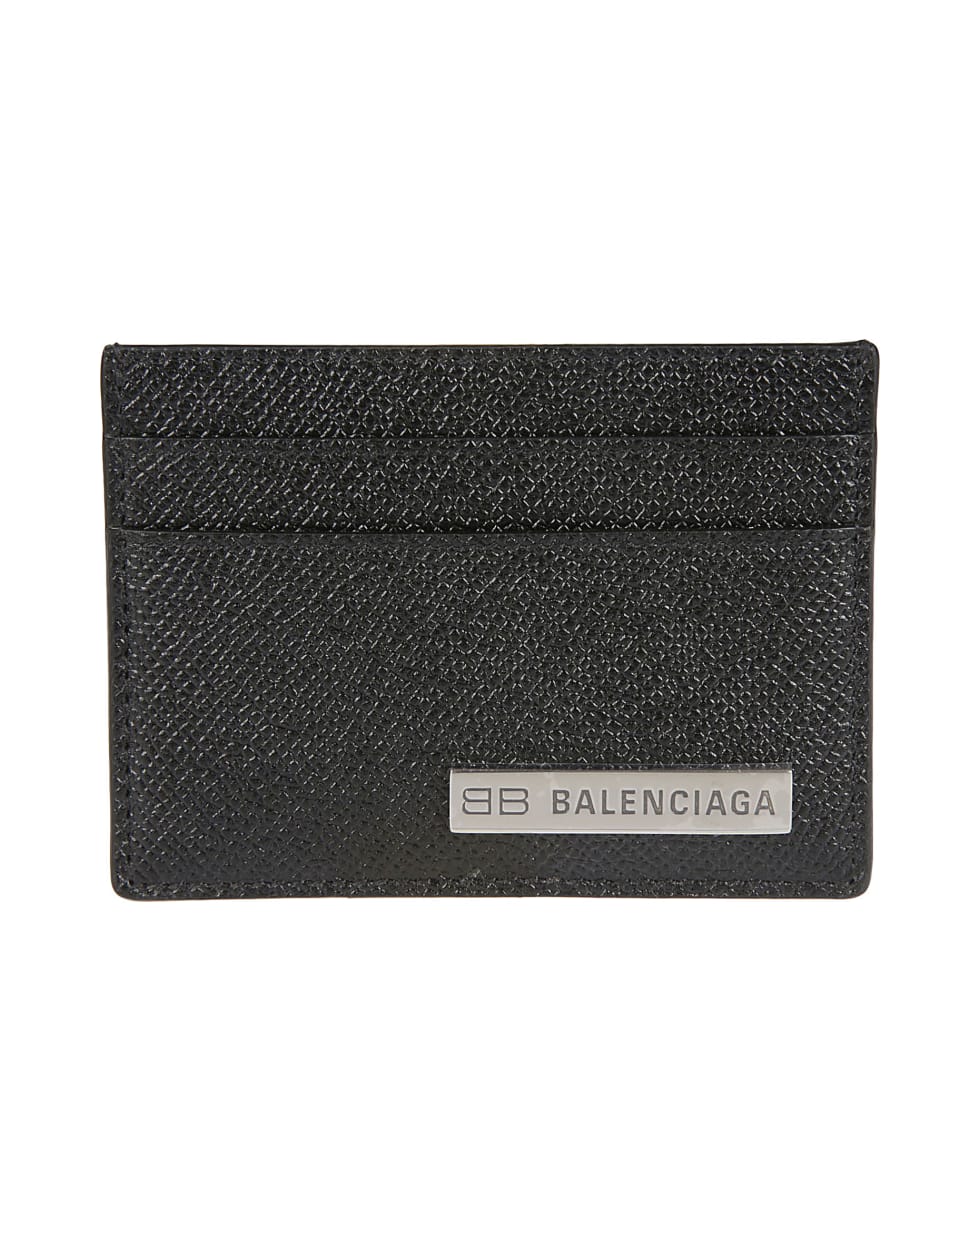 Balenciaga Plate Card Holder - Black